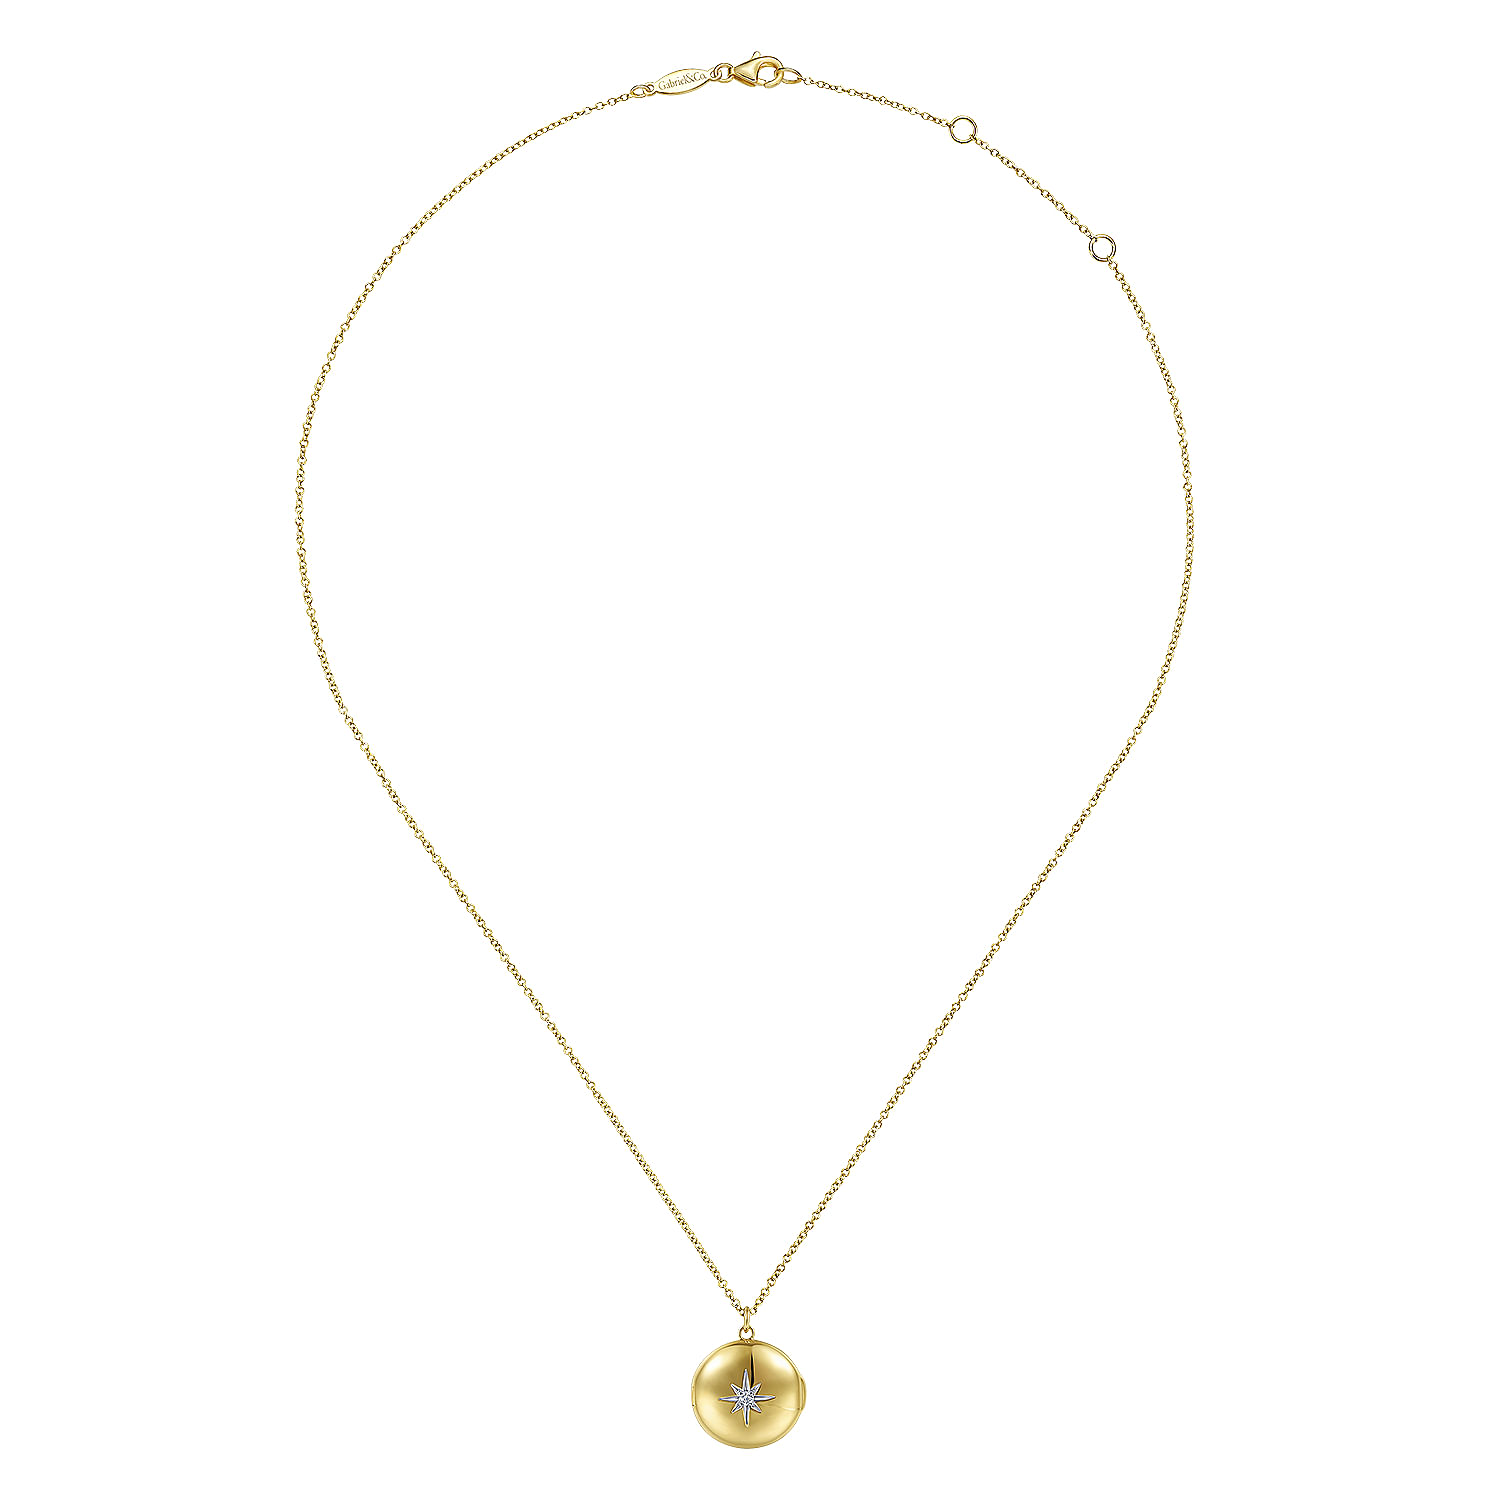 14K Yellow Gold Round Locket Pendant  Necklace with Diamond Star Center